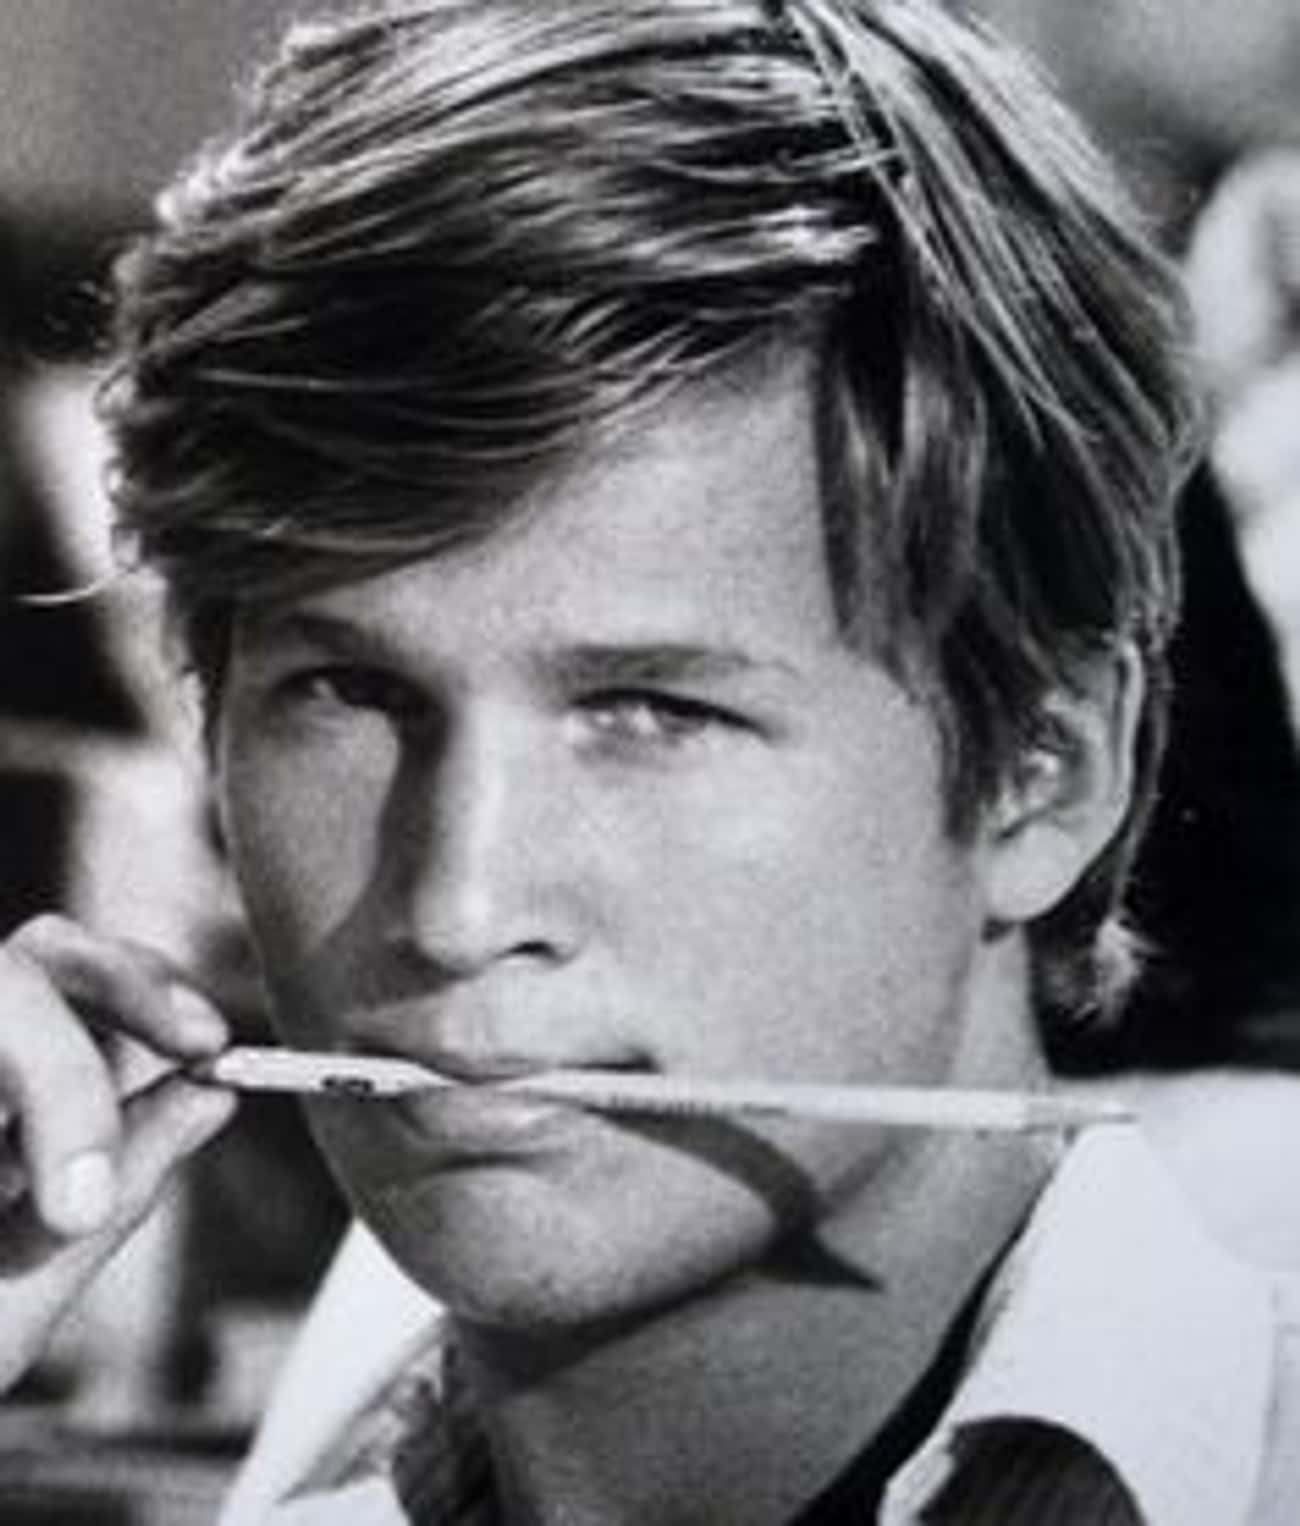 Young Jeff Bridges Black and White Closeup